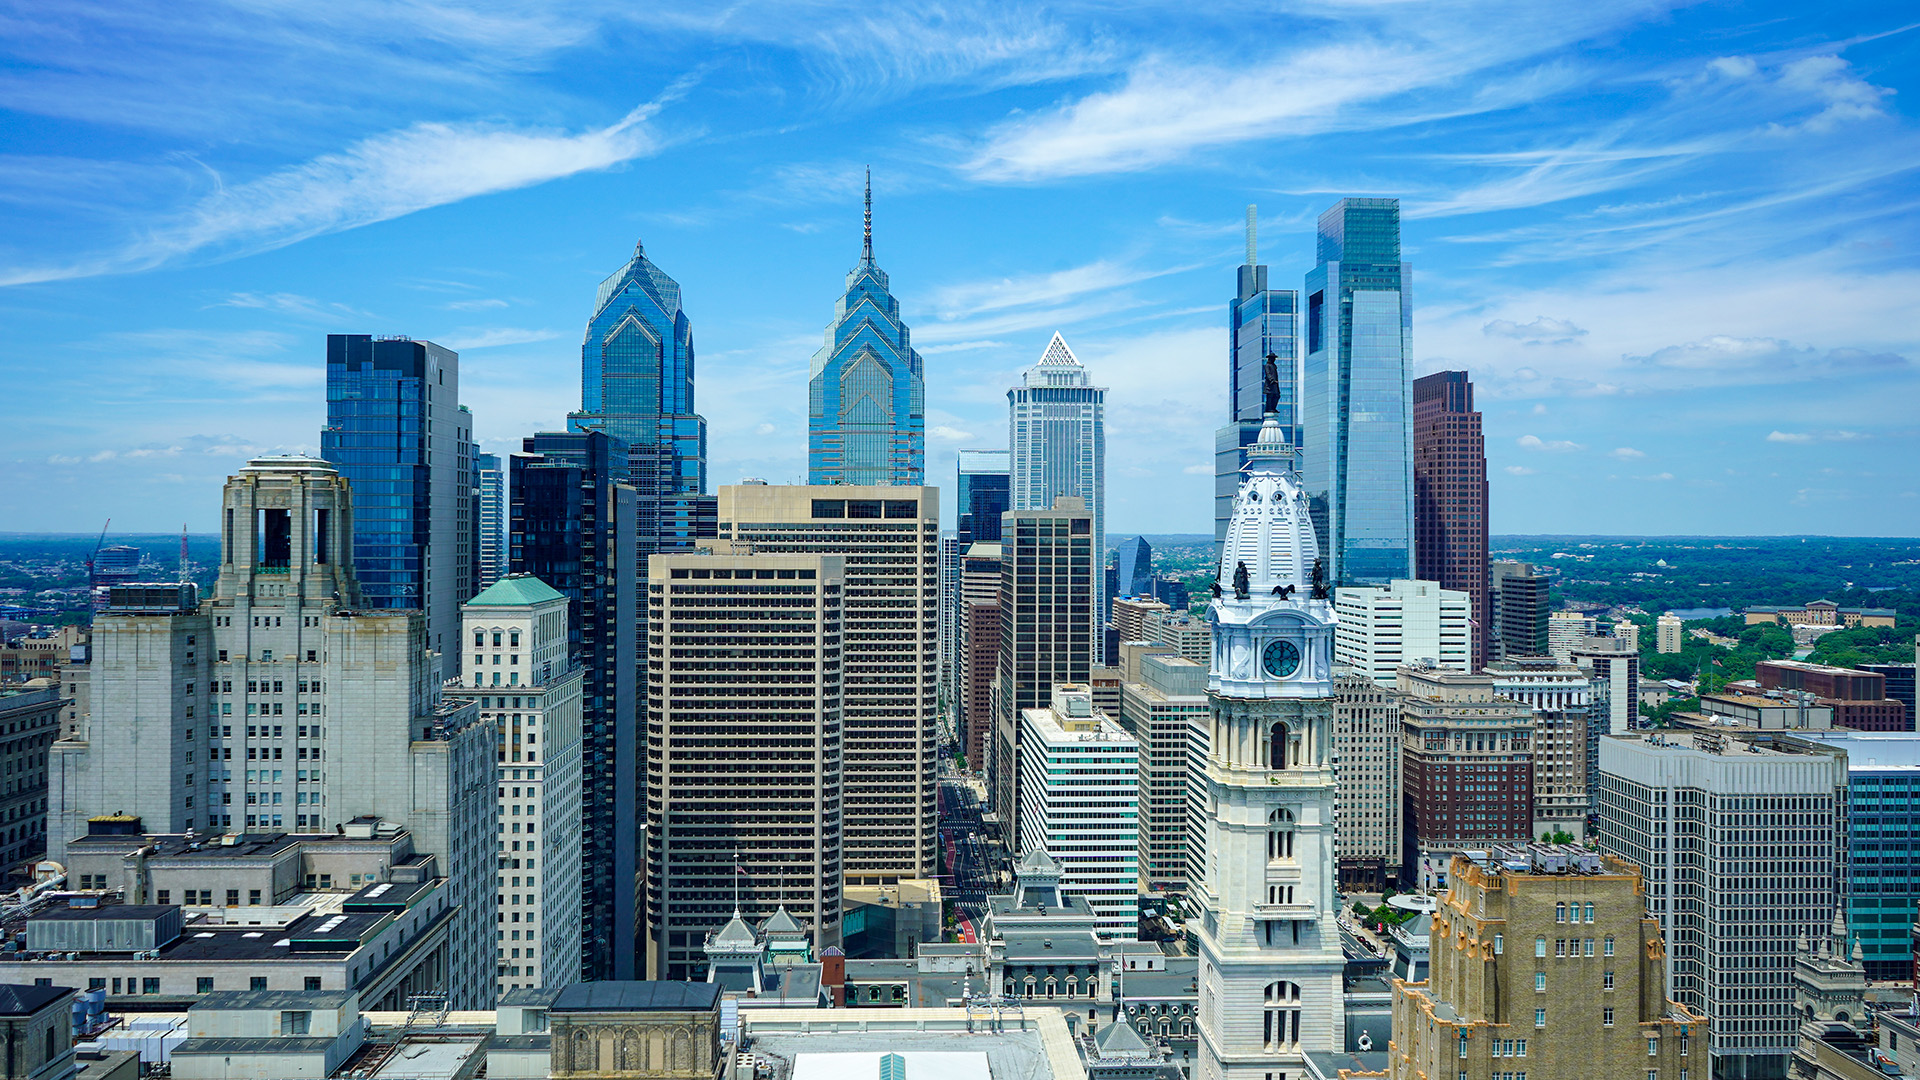 Philadelphia's skyline with bright blue skies.